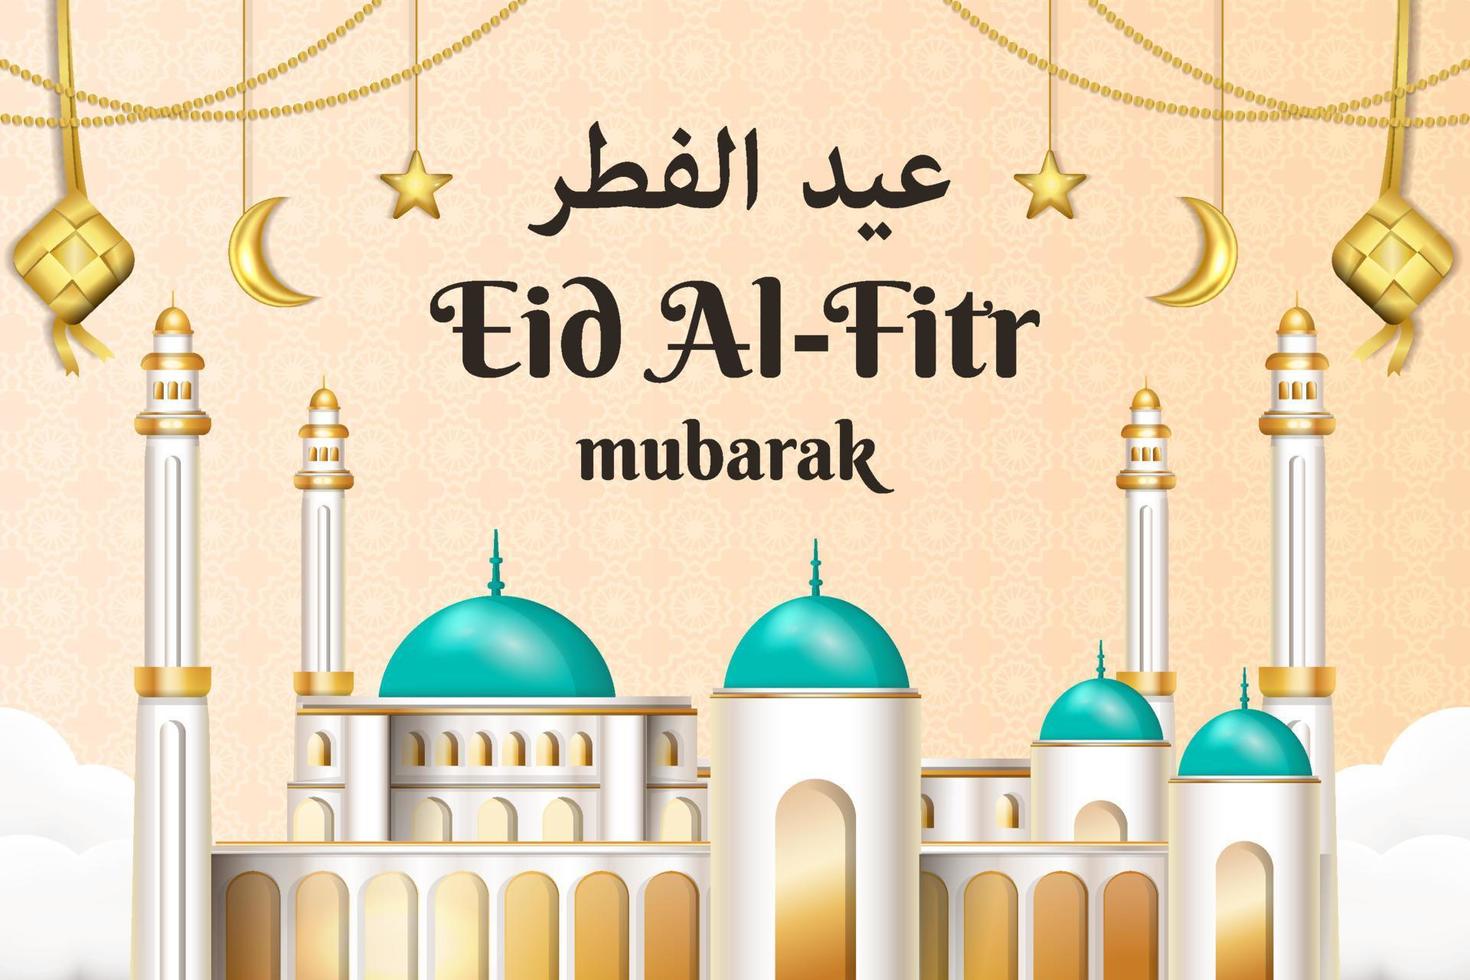 realistic eid al fitr mubarak banner illustration with golden ketupat, stars, and moons vector